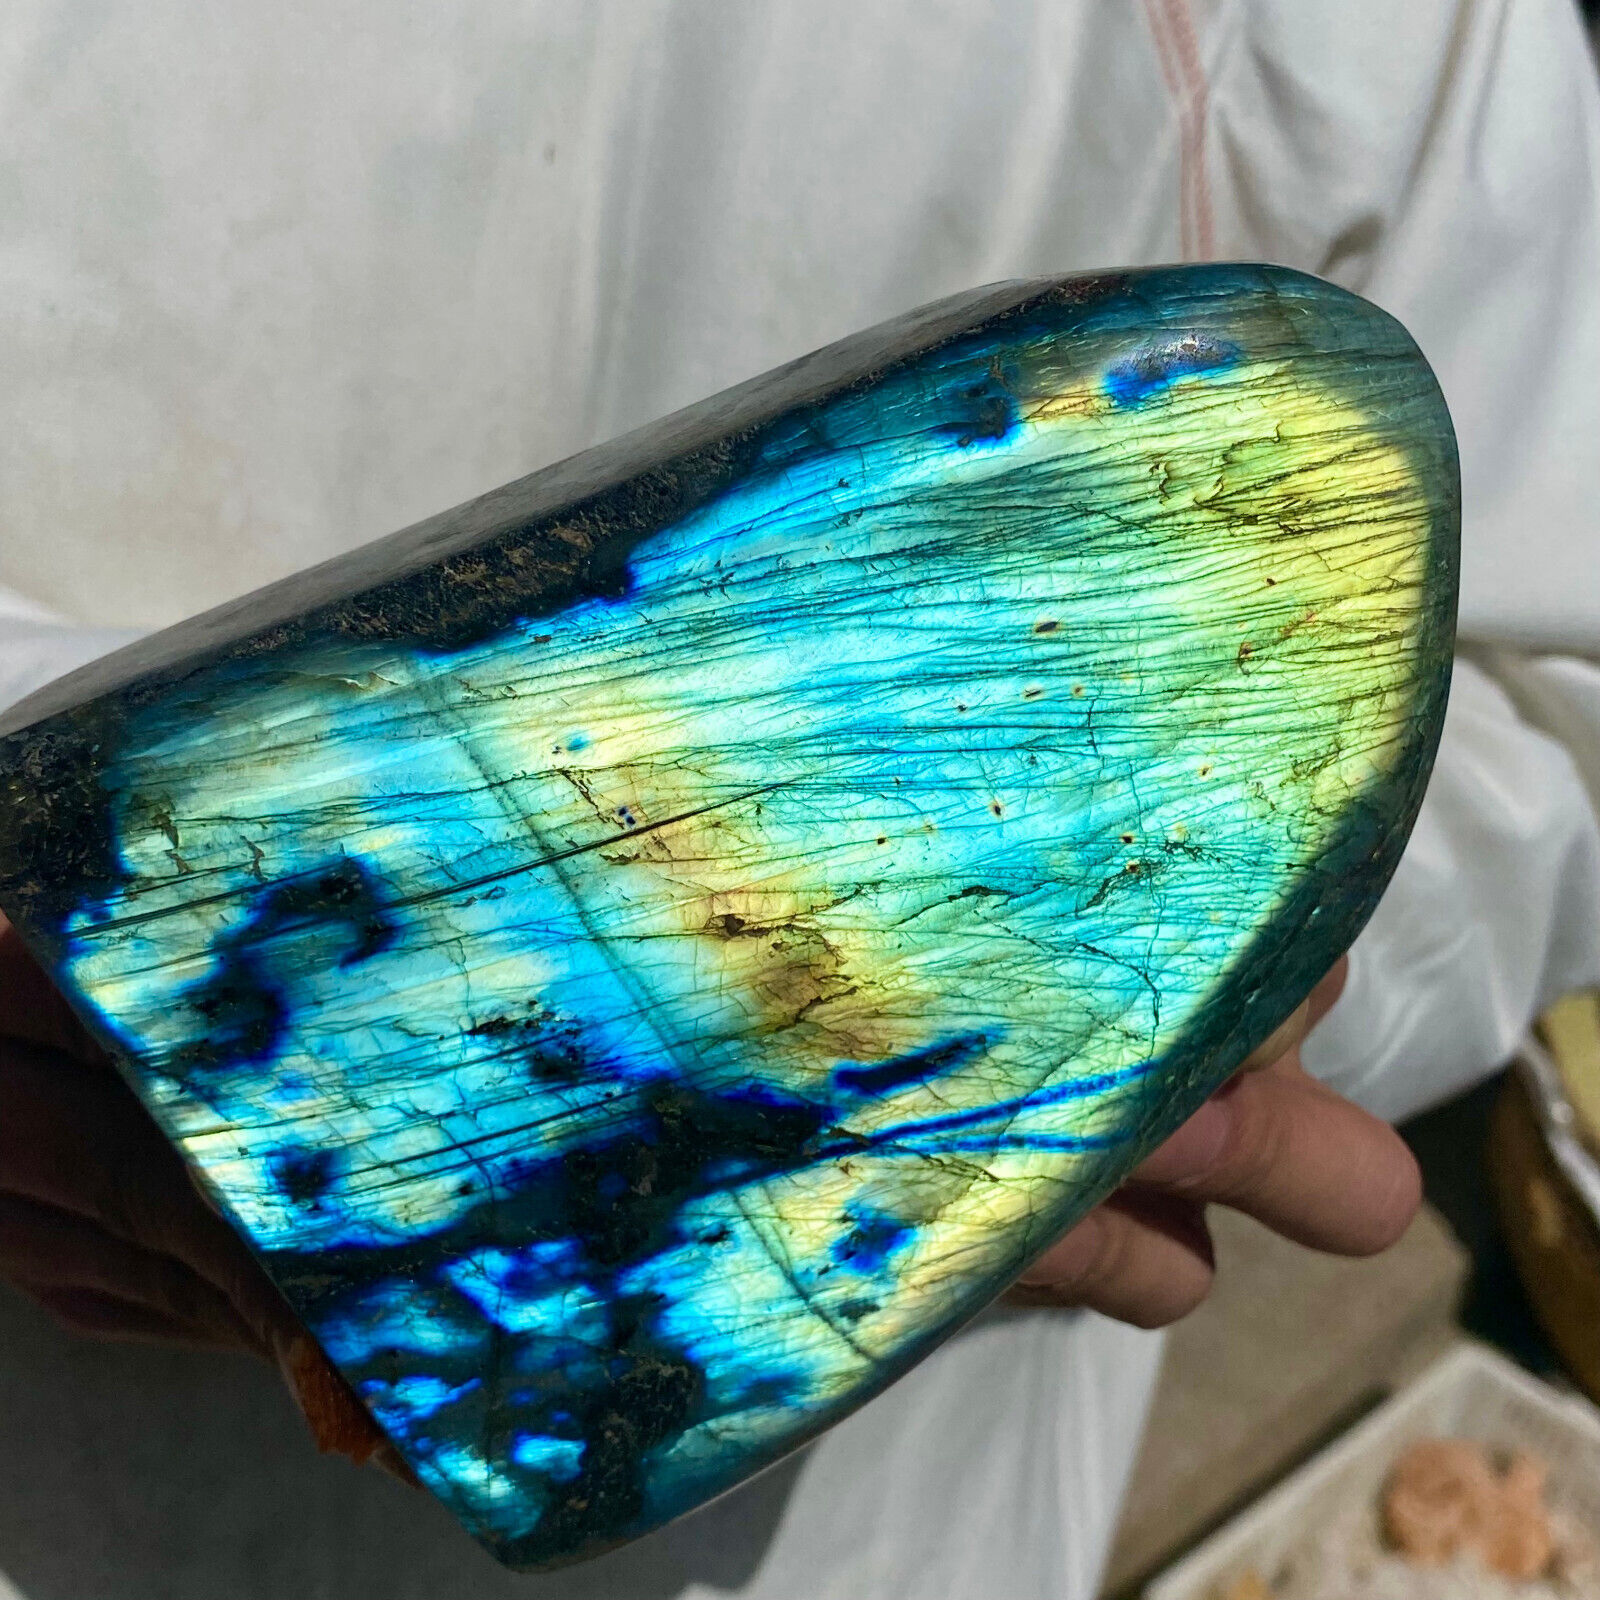 3.6lb Large Natural Labradorite Quartz Crystal Display Mineral Specimen Healing